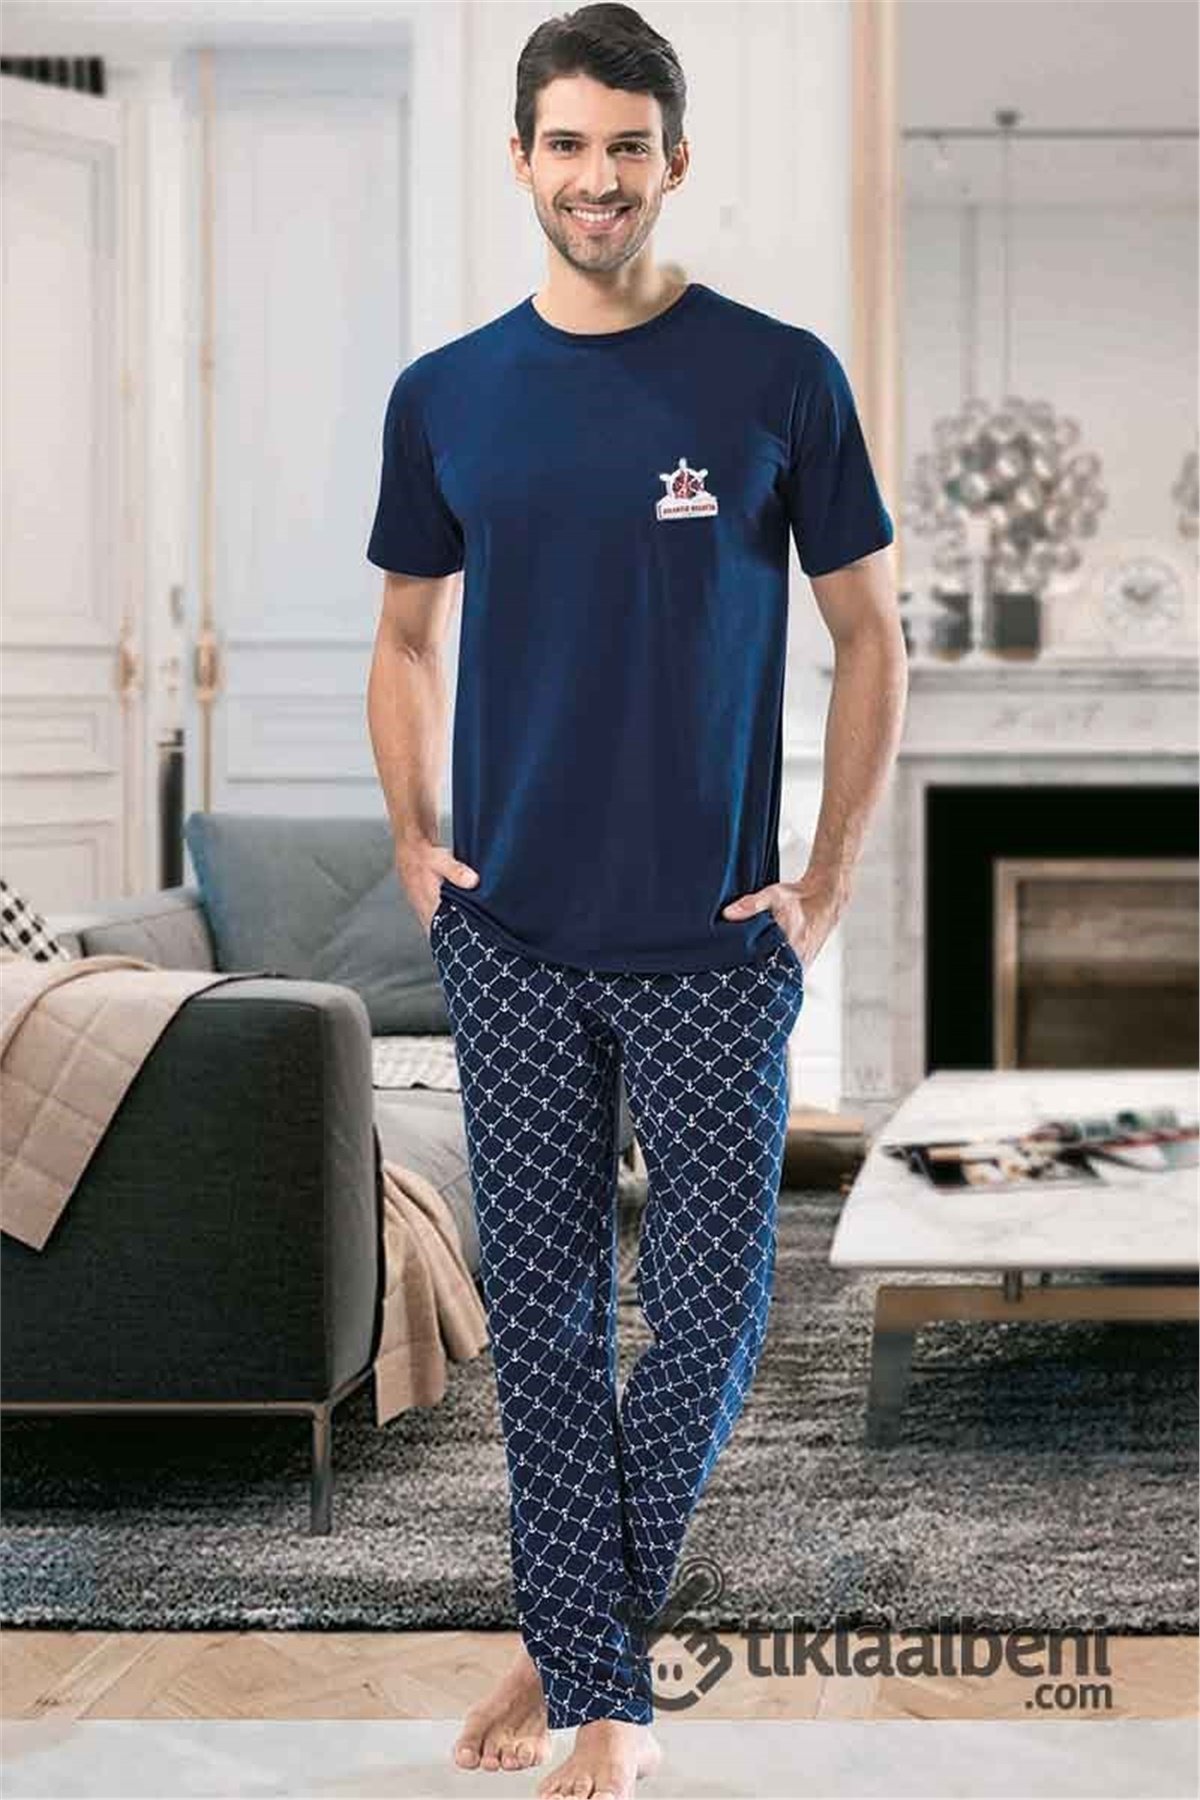 Erkek Yazlık Pijama NBB 7846